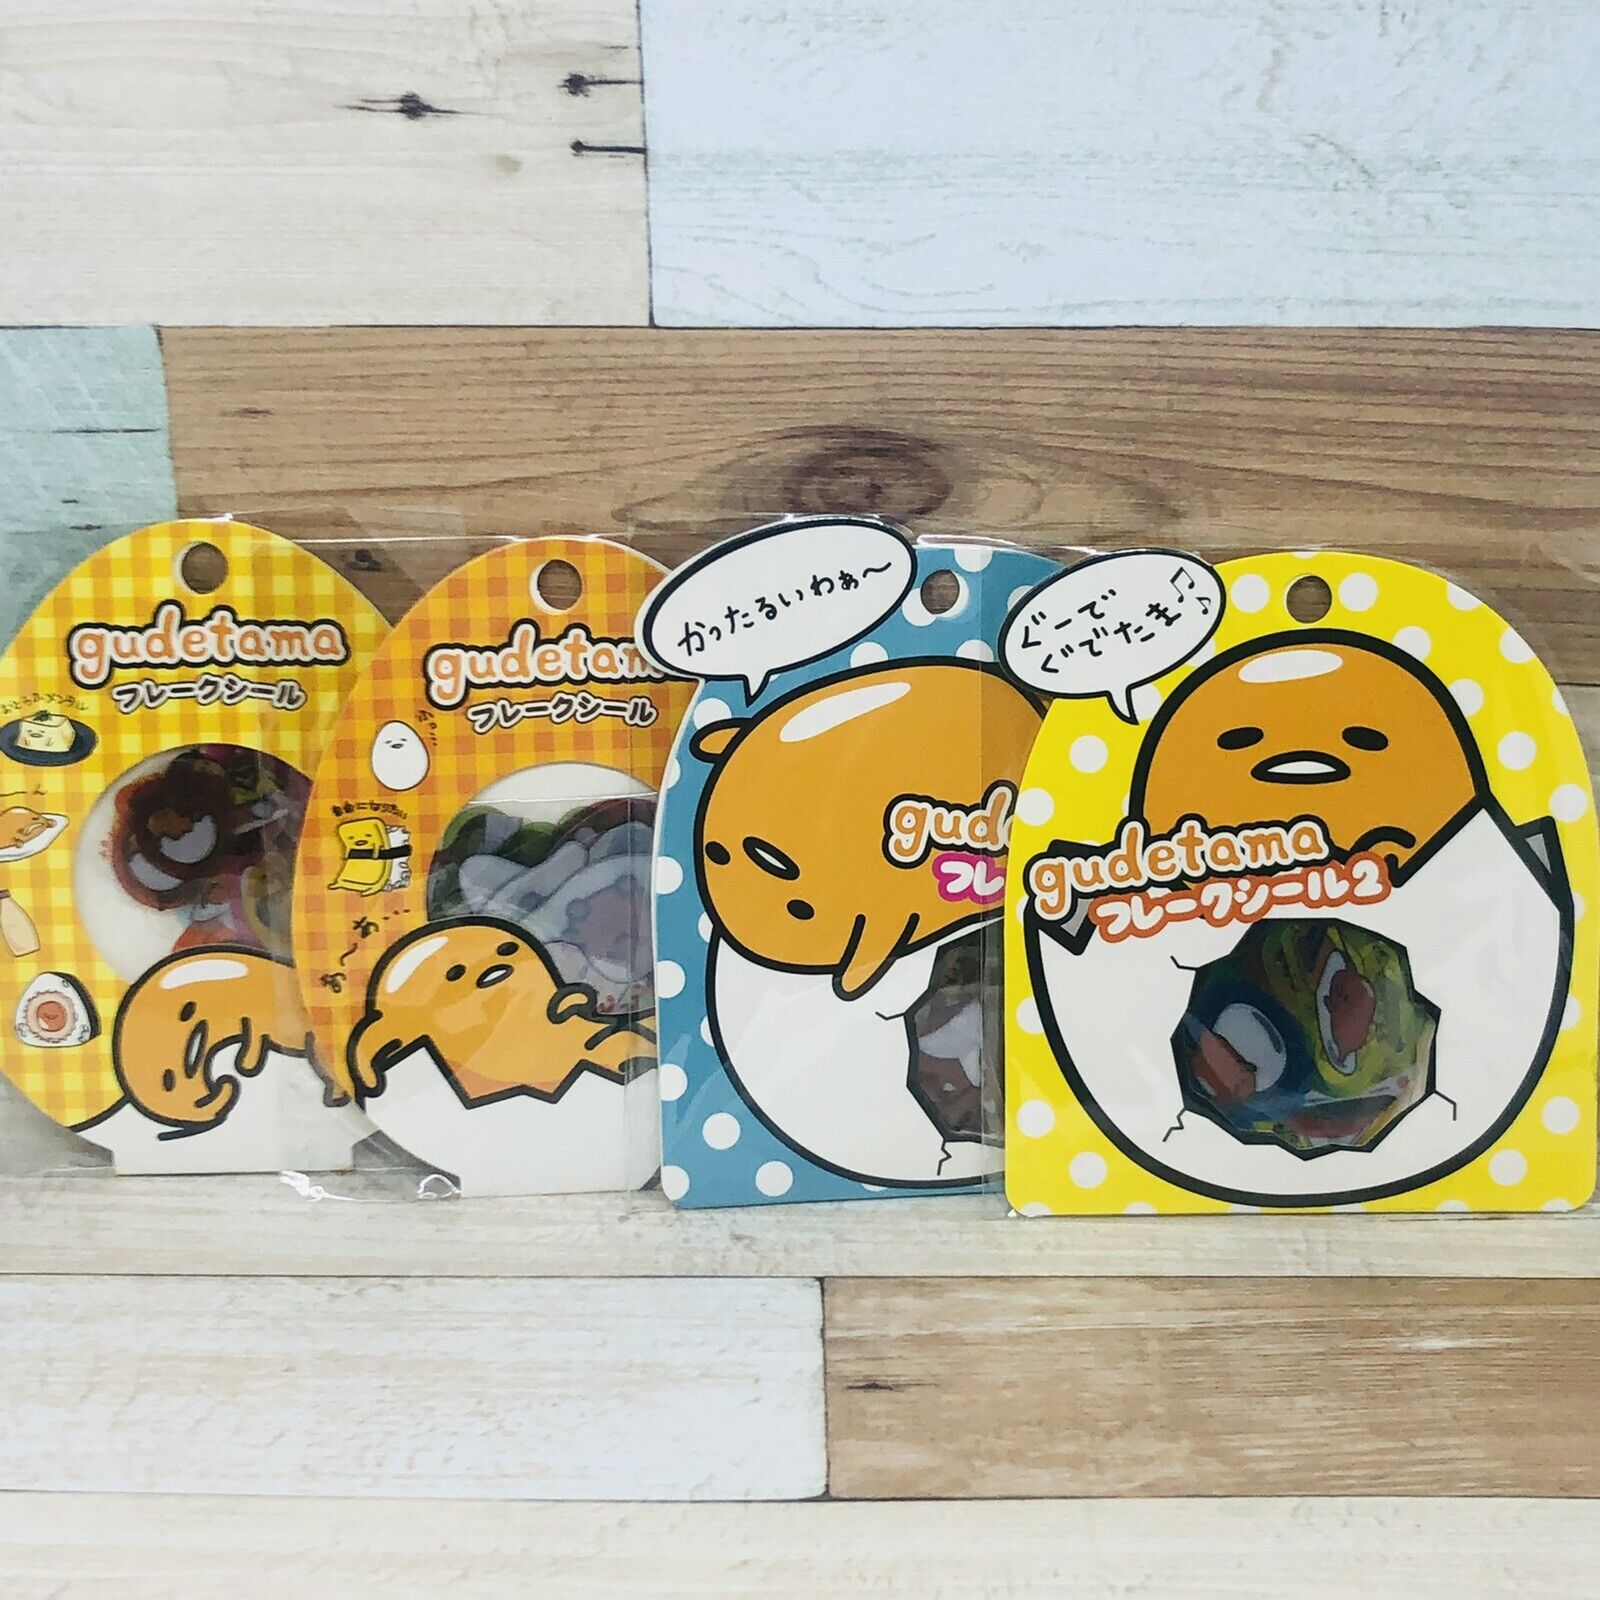 Sanrio Gudetama Stickers Lot of 4 Packs